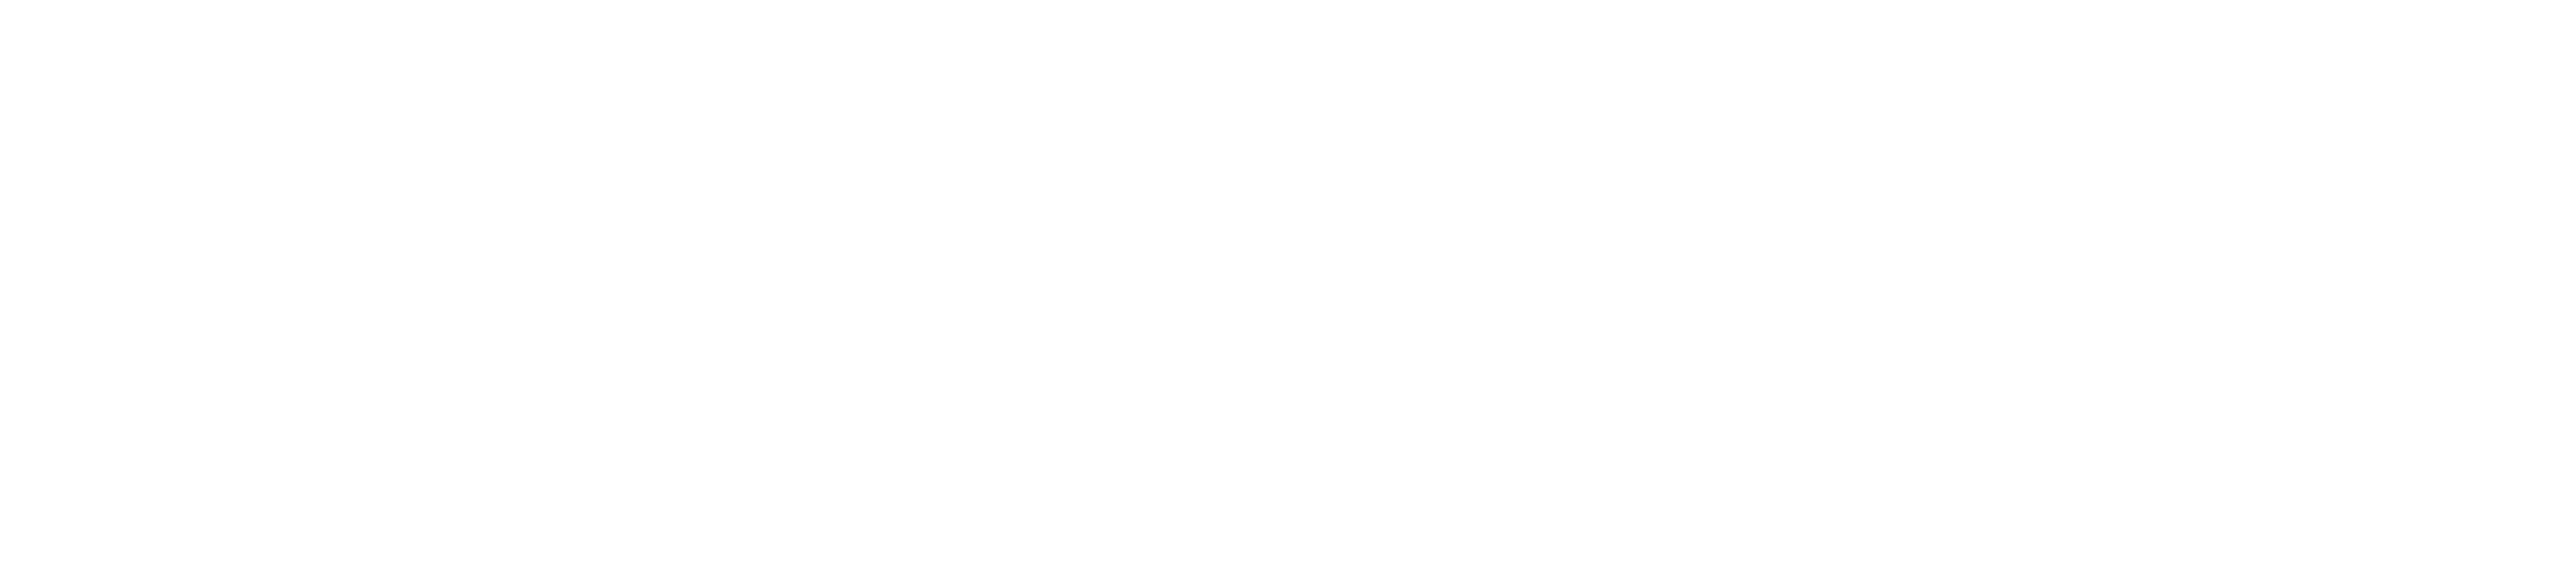 Logo UHA